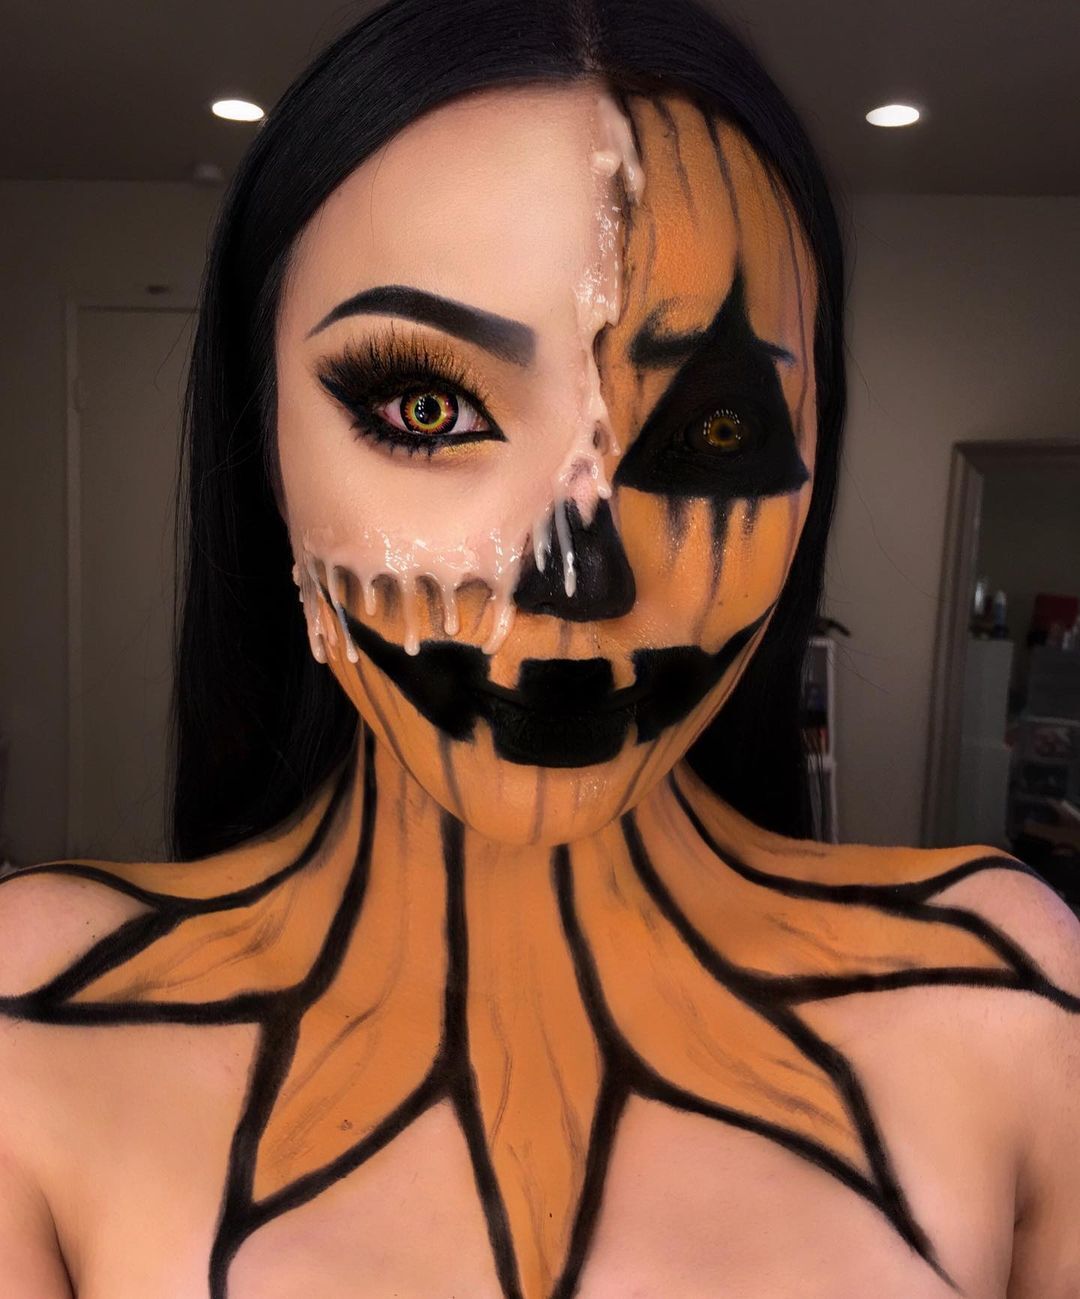 diy sexy pumpkin costume